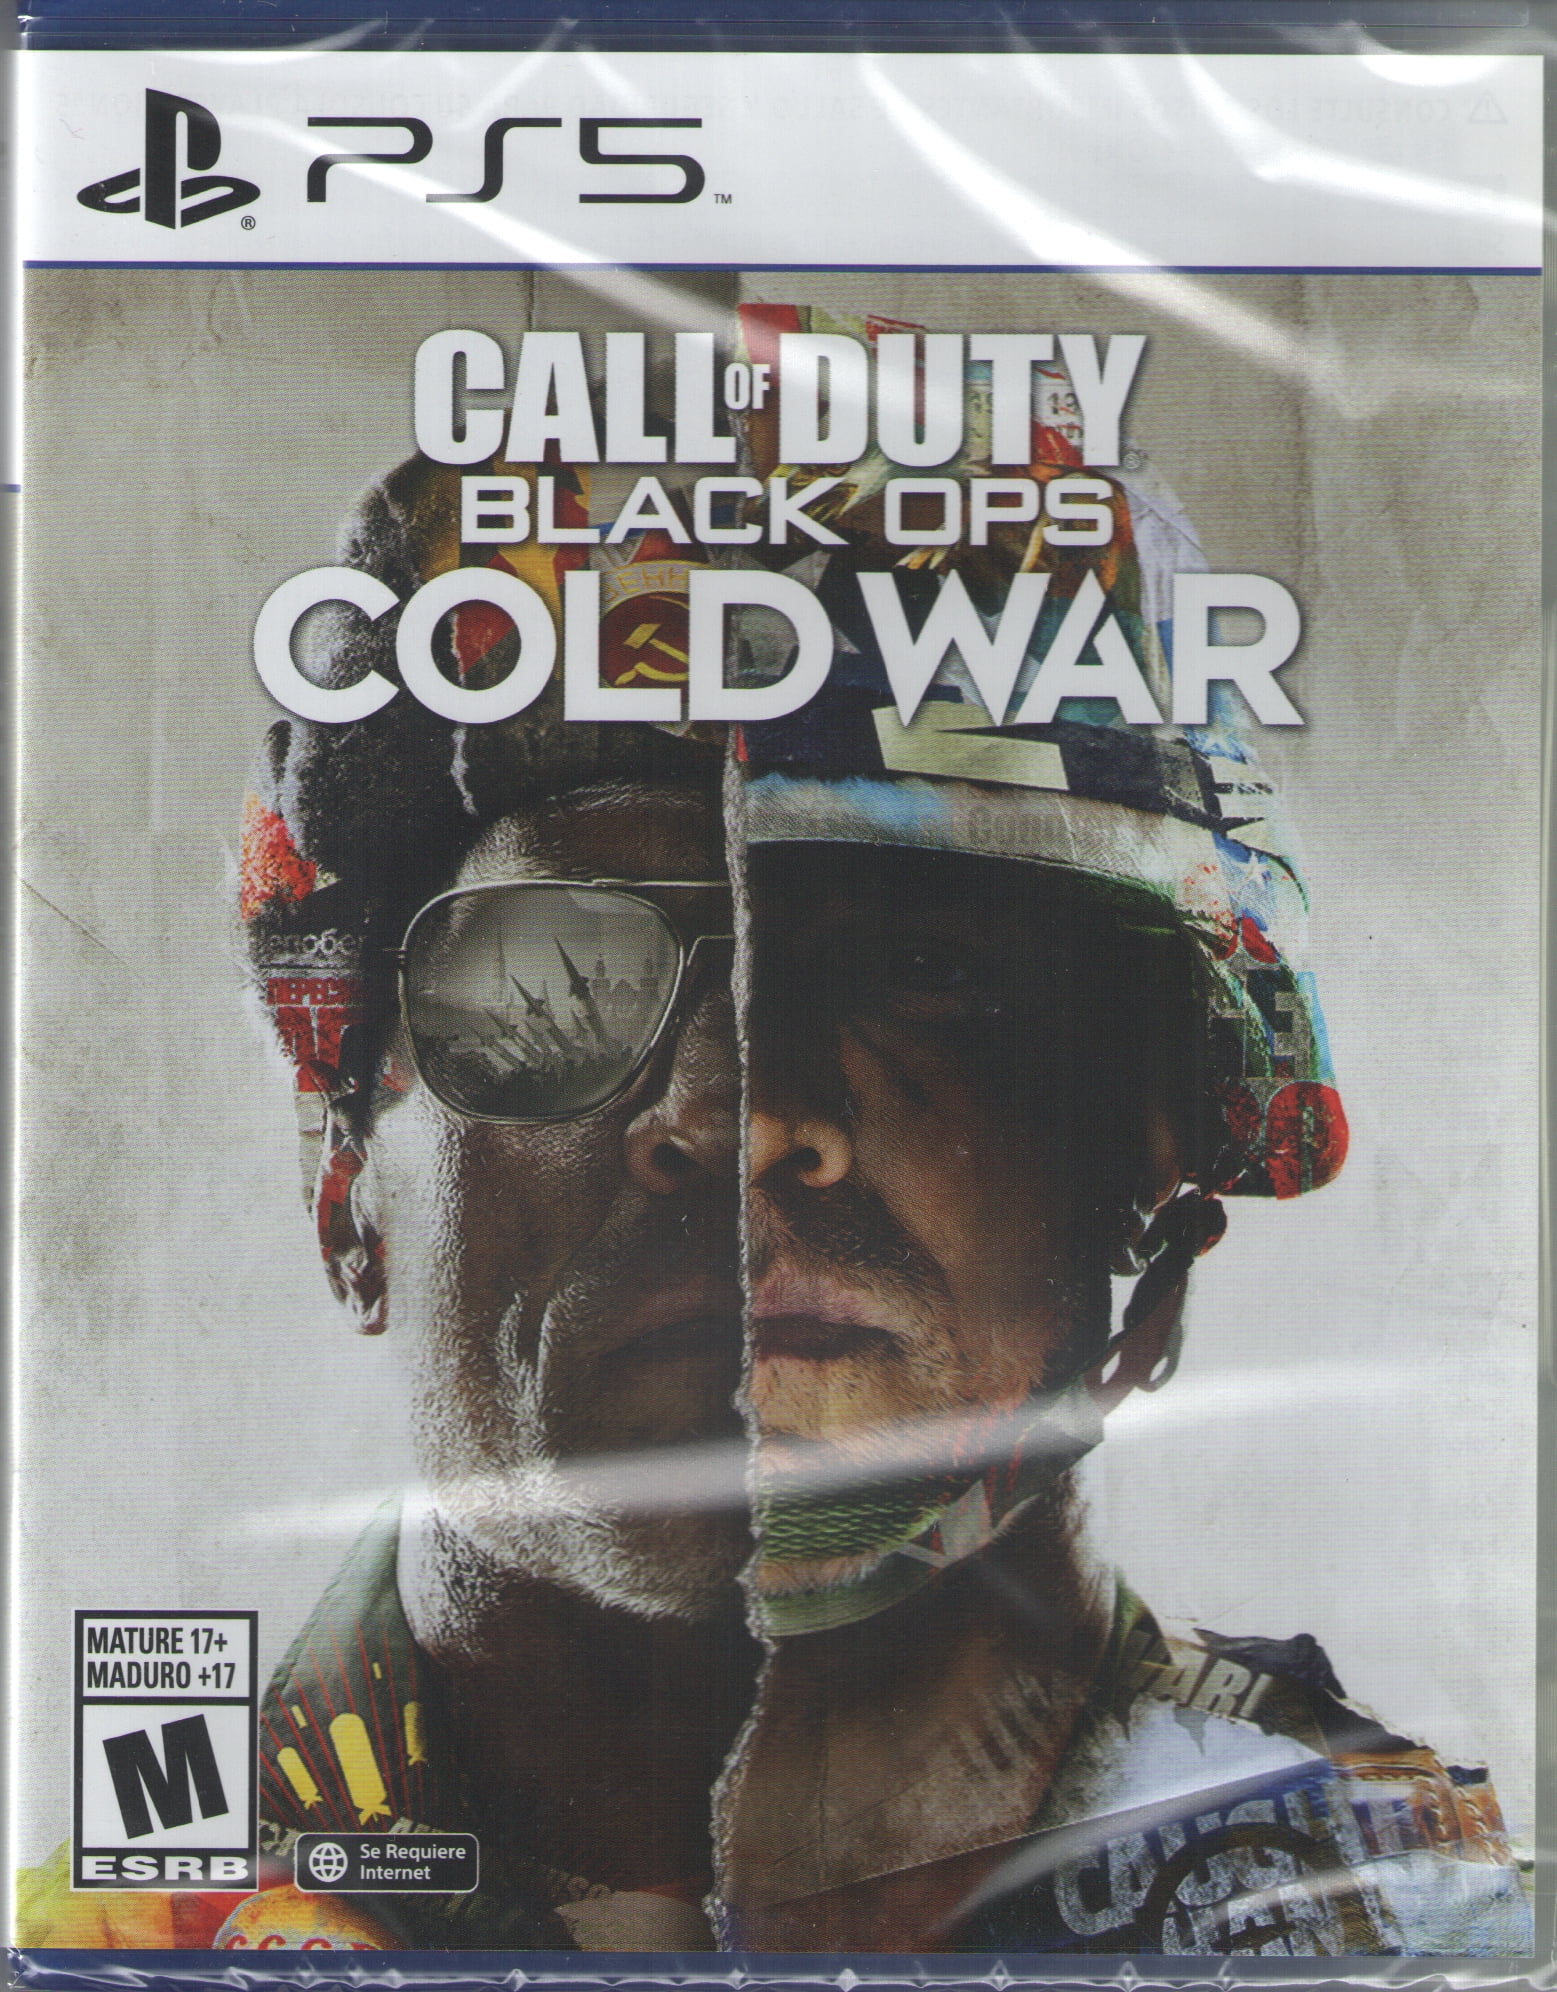 Call of Duty: Black Ops III - PS5 (Digital Game)